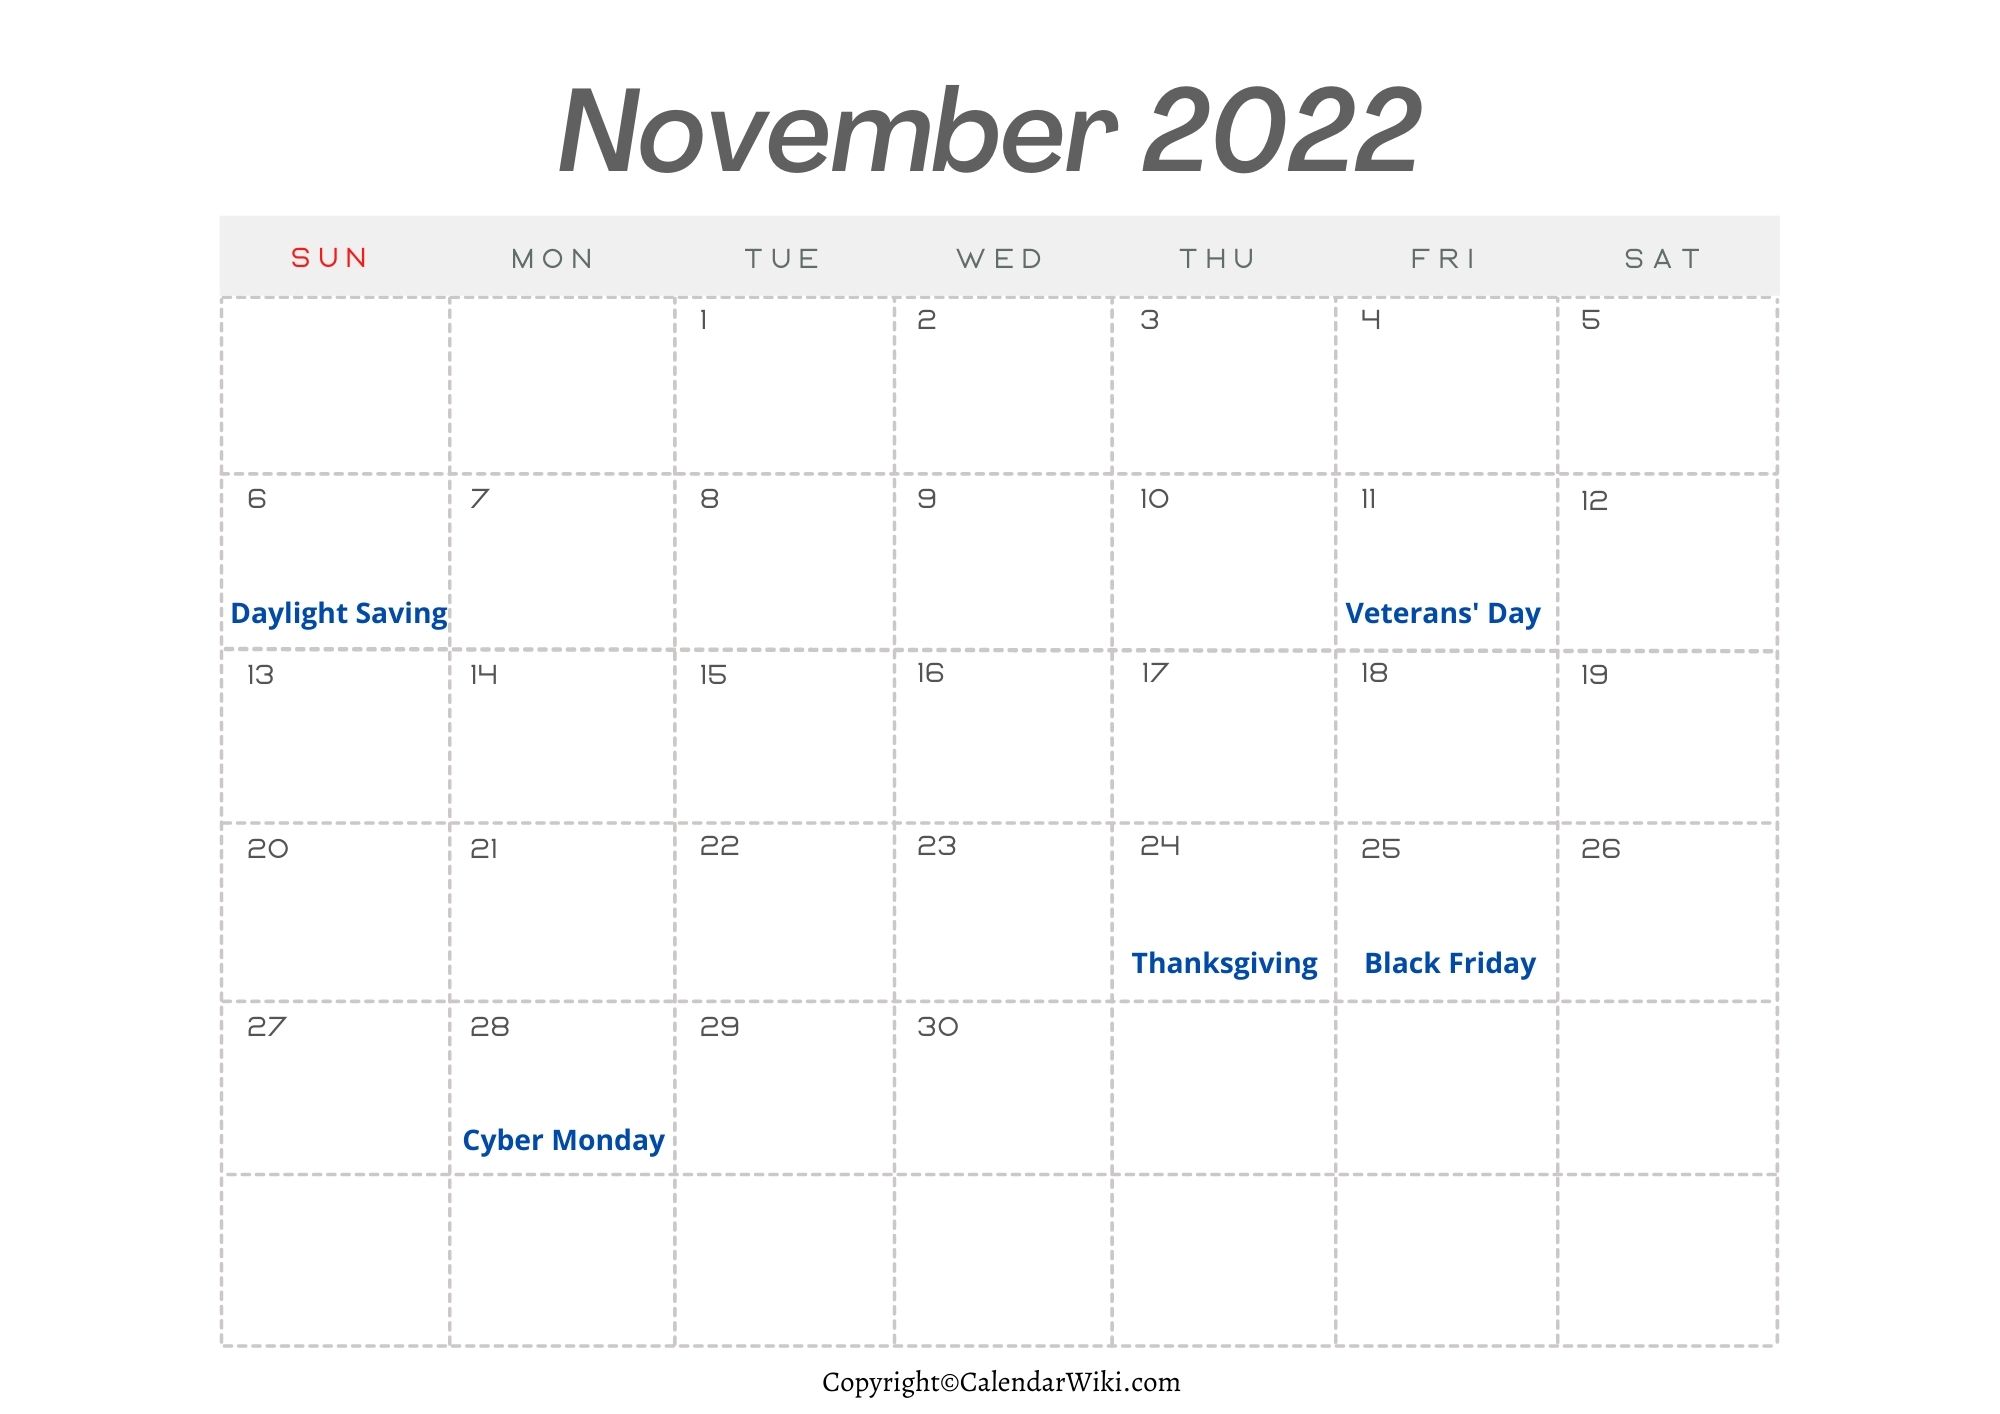 November Holidays 2022